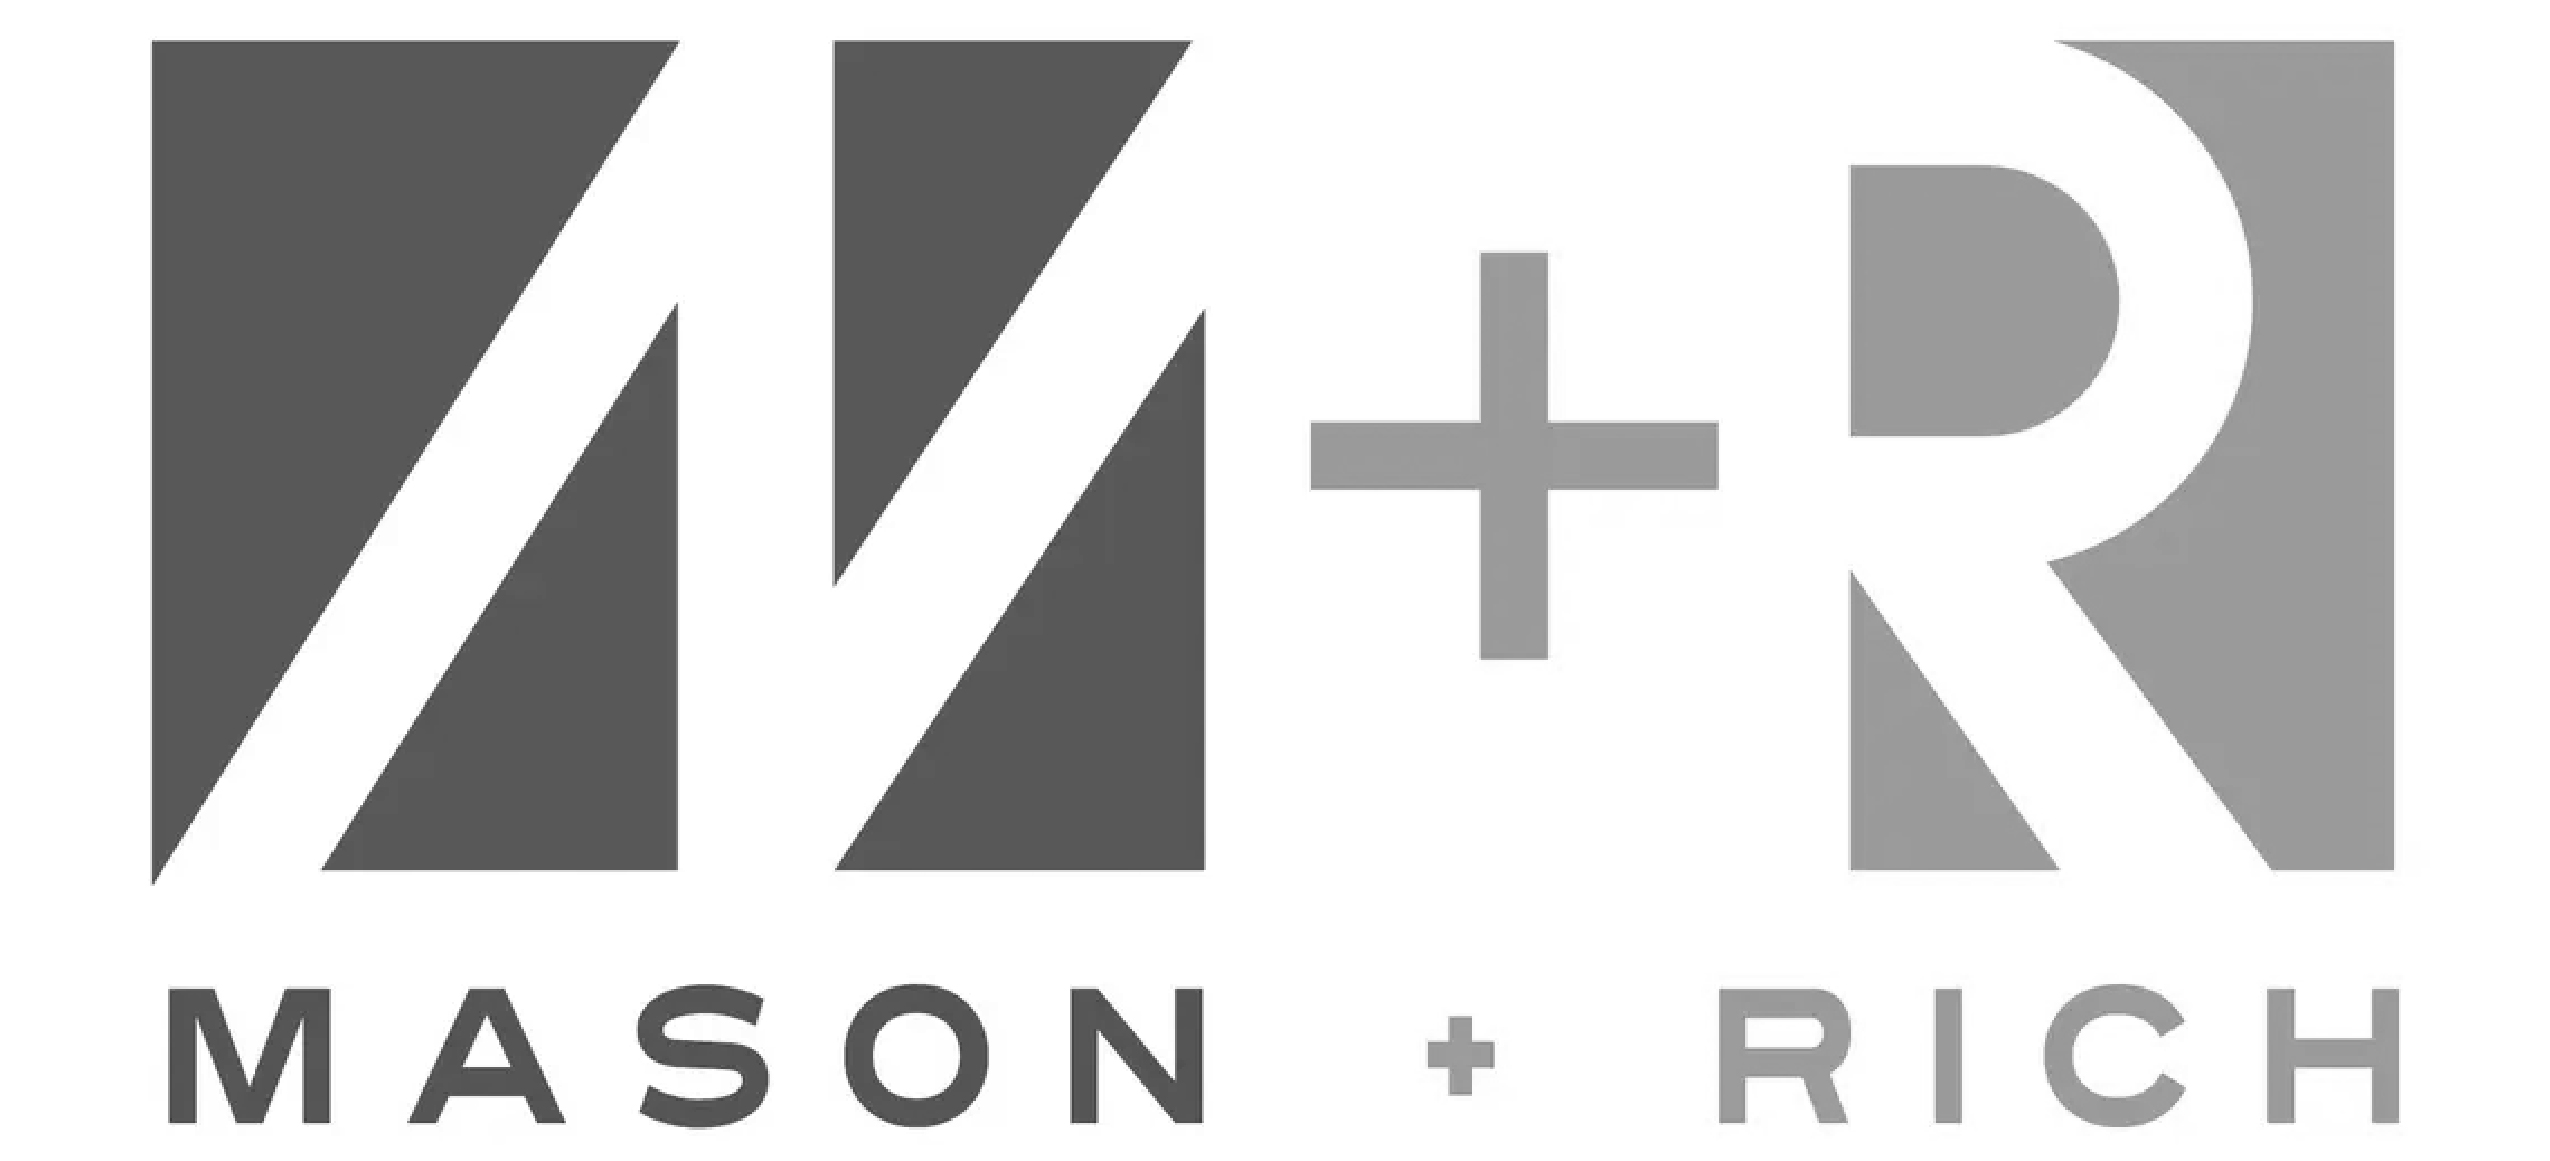 mason and rich logo gs